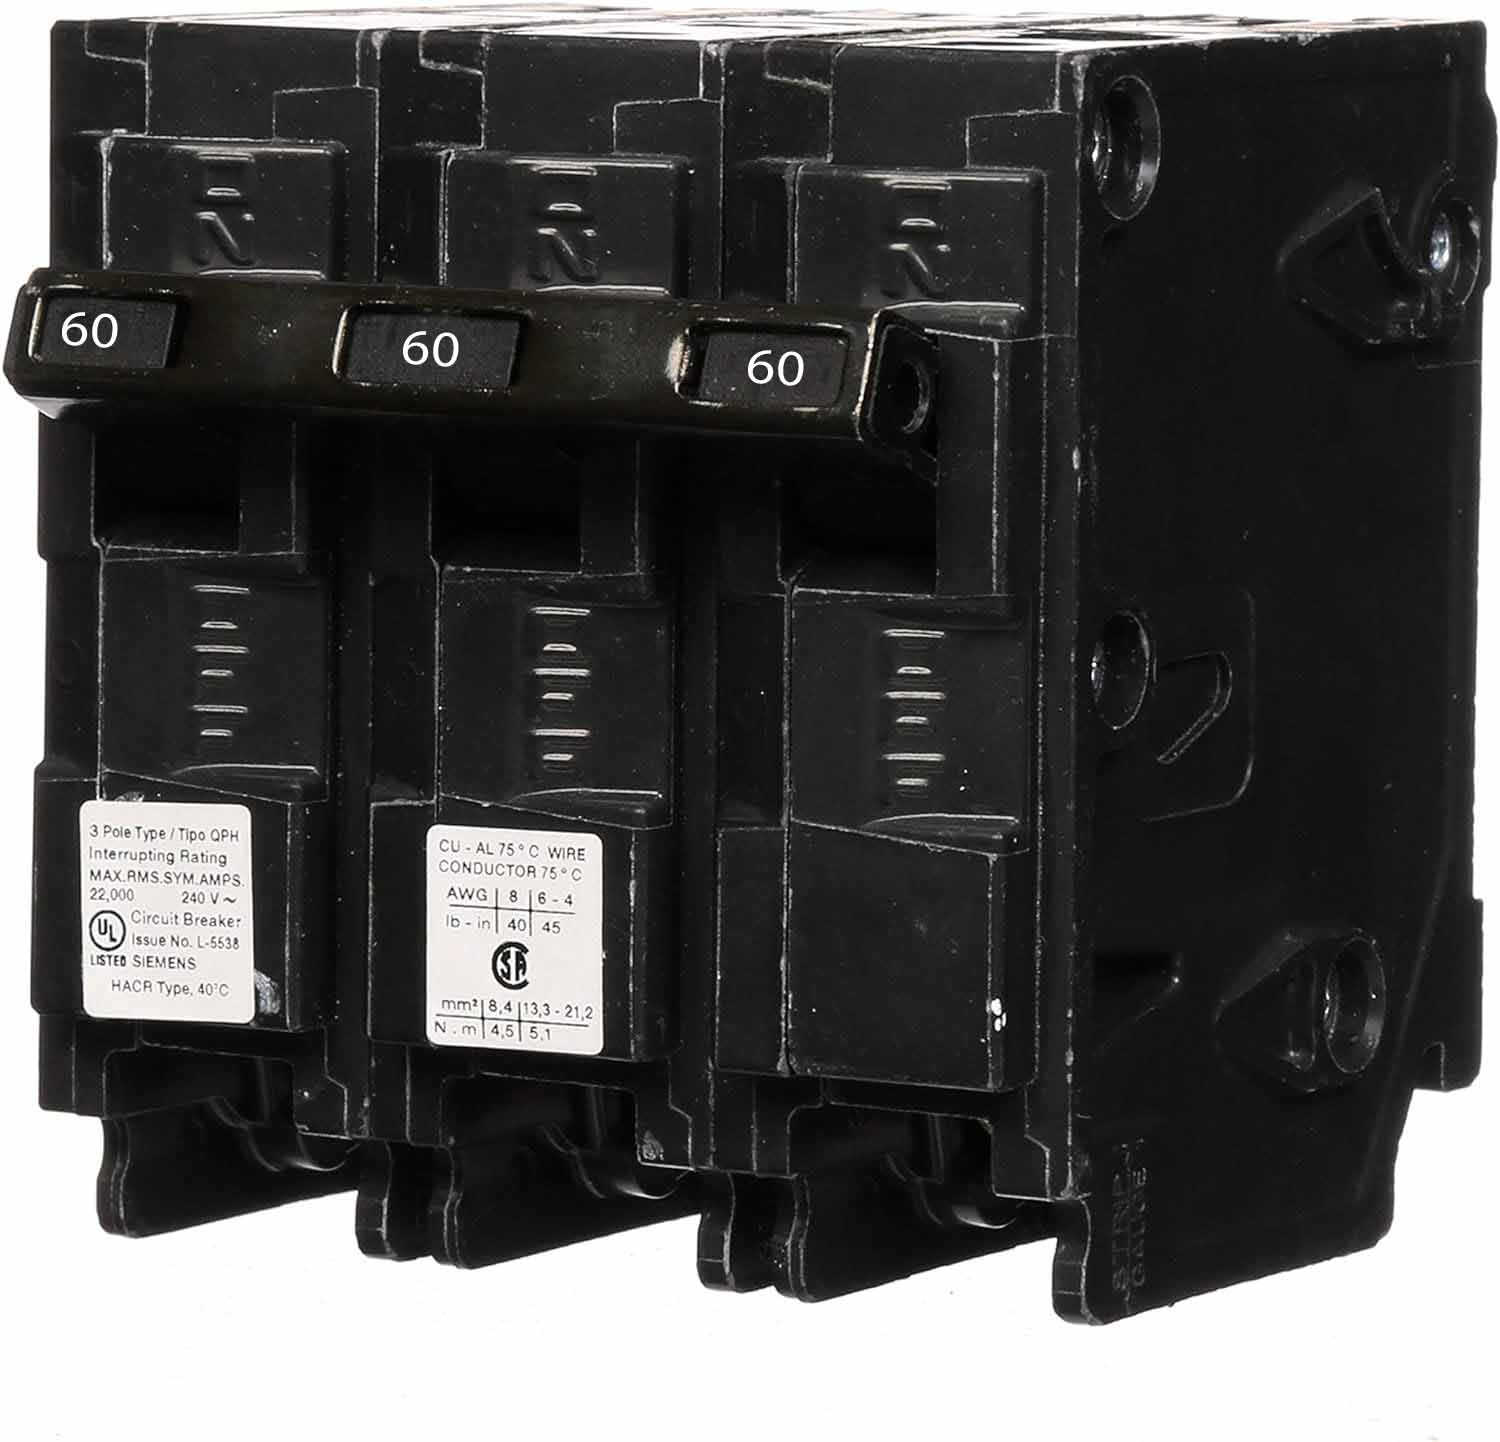 Q360H - Siemens - 60 Amp 22kA Circuit Breaker